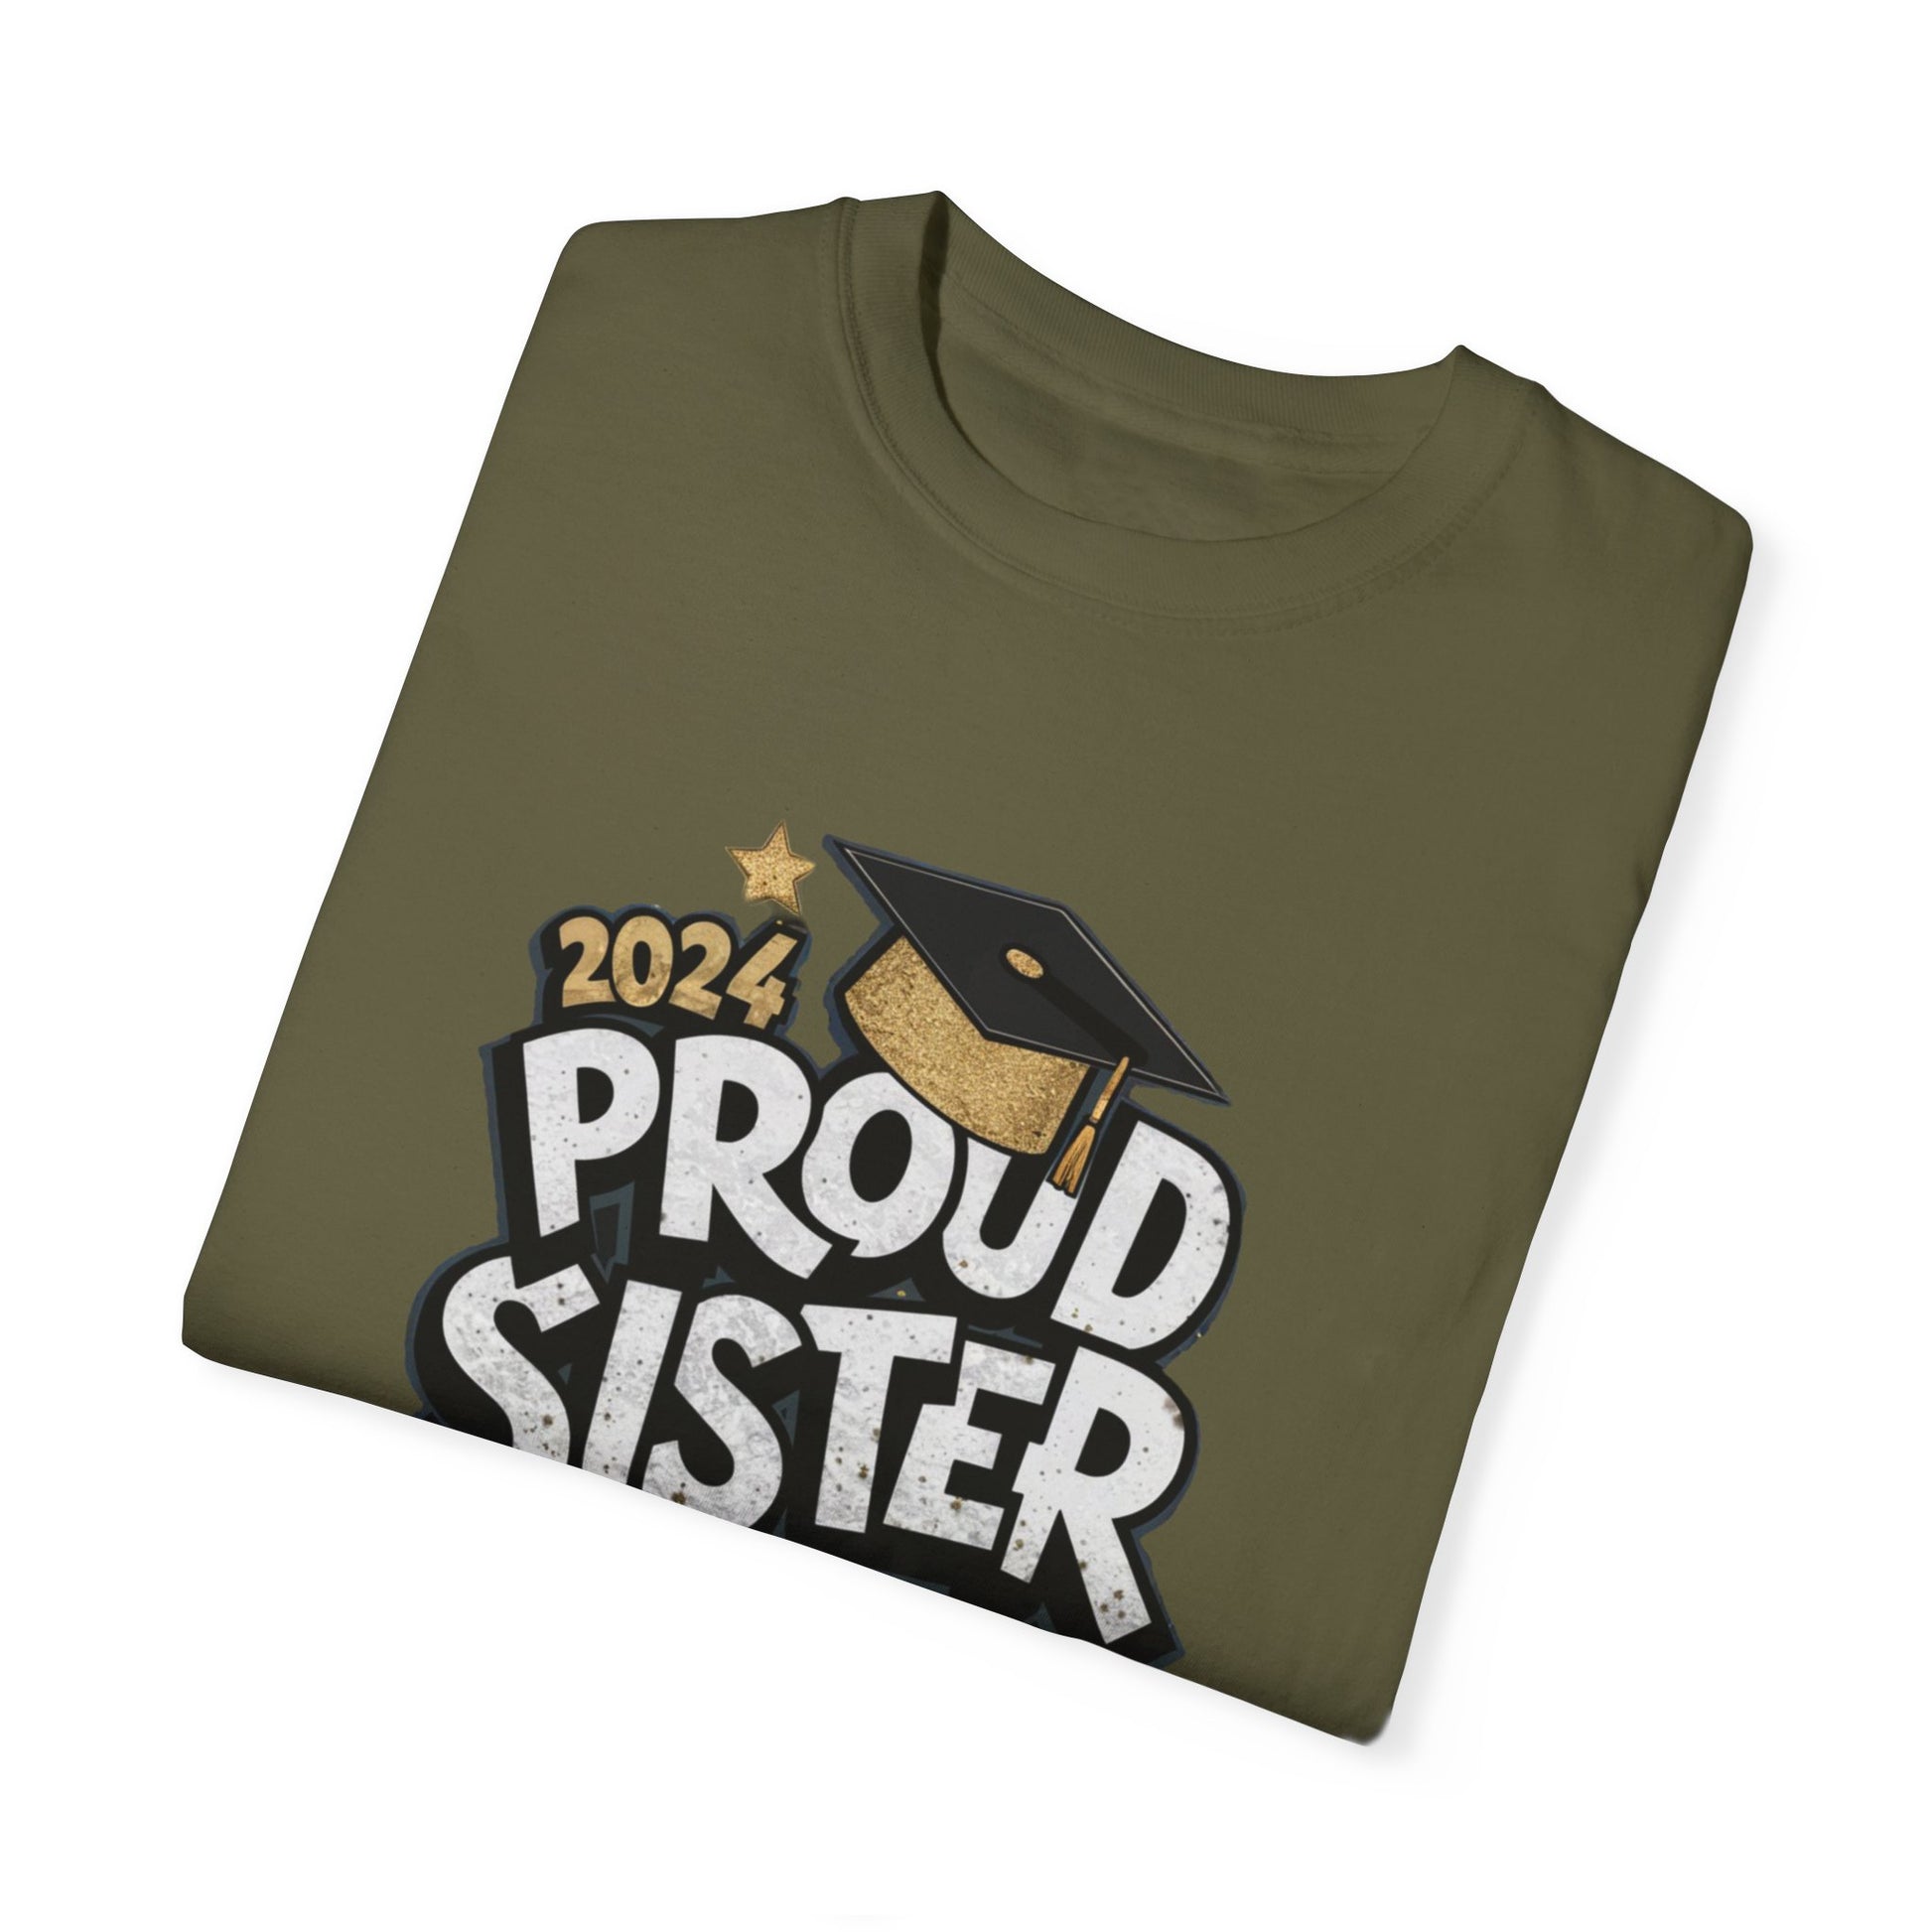 Proud Sister of a 2024 Graduate Unisex Garment-dyed T-shirt Cotton Funny Humorous Graphic Soft Premium Unisex Men Women Sage T-shirt Birthday Gift-53